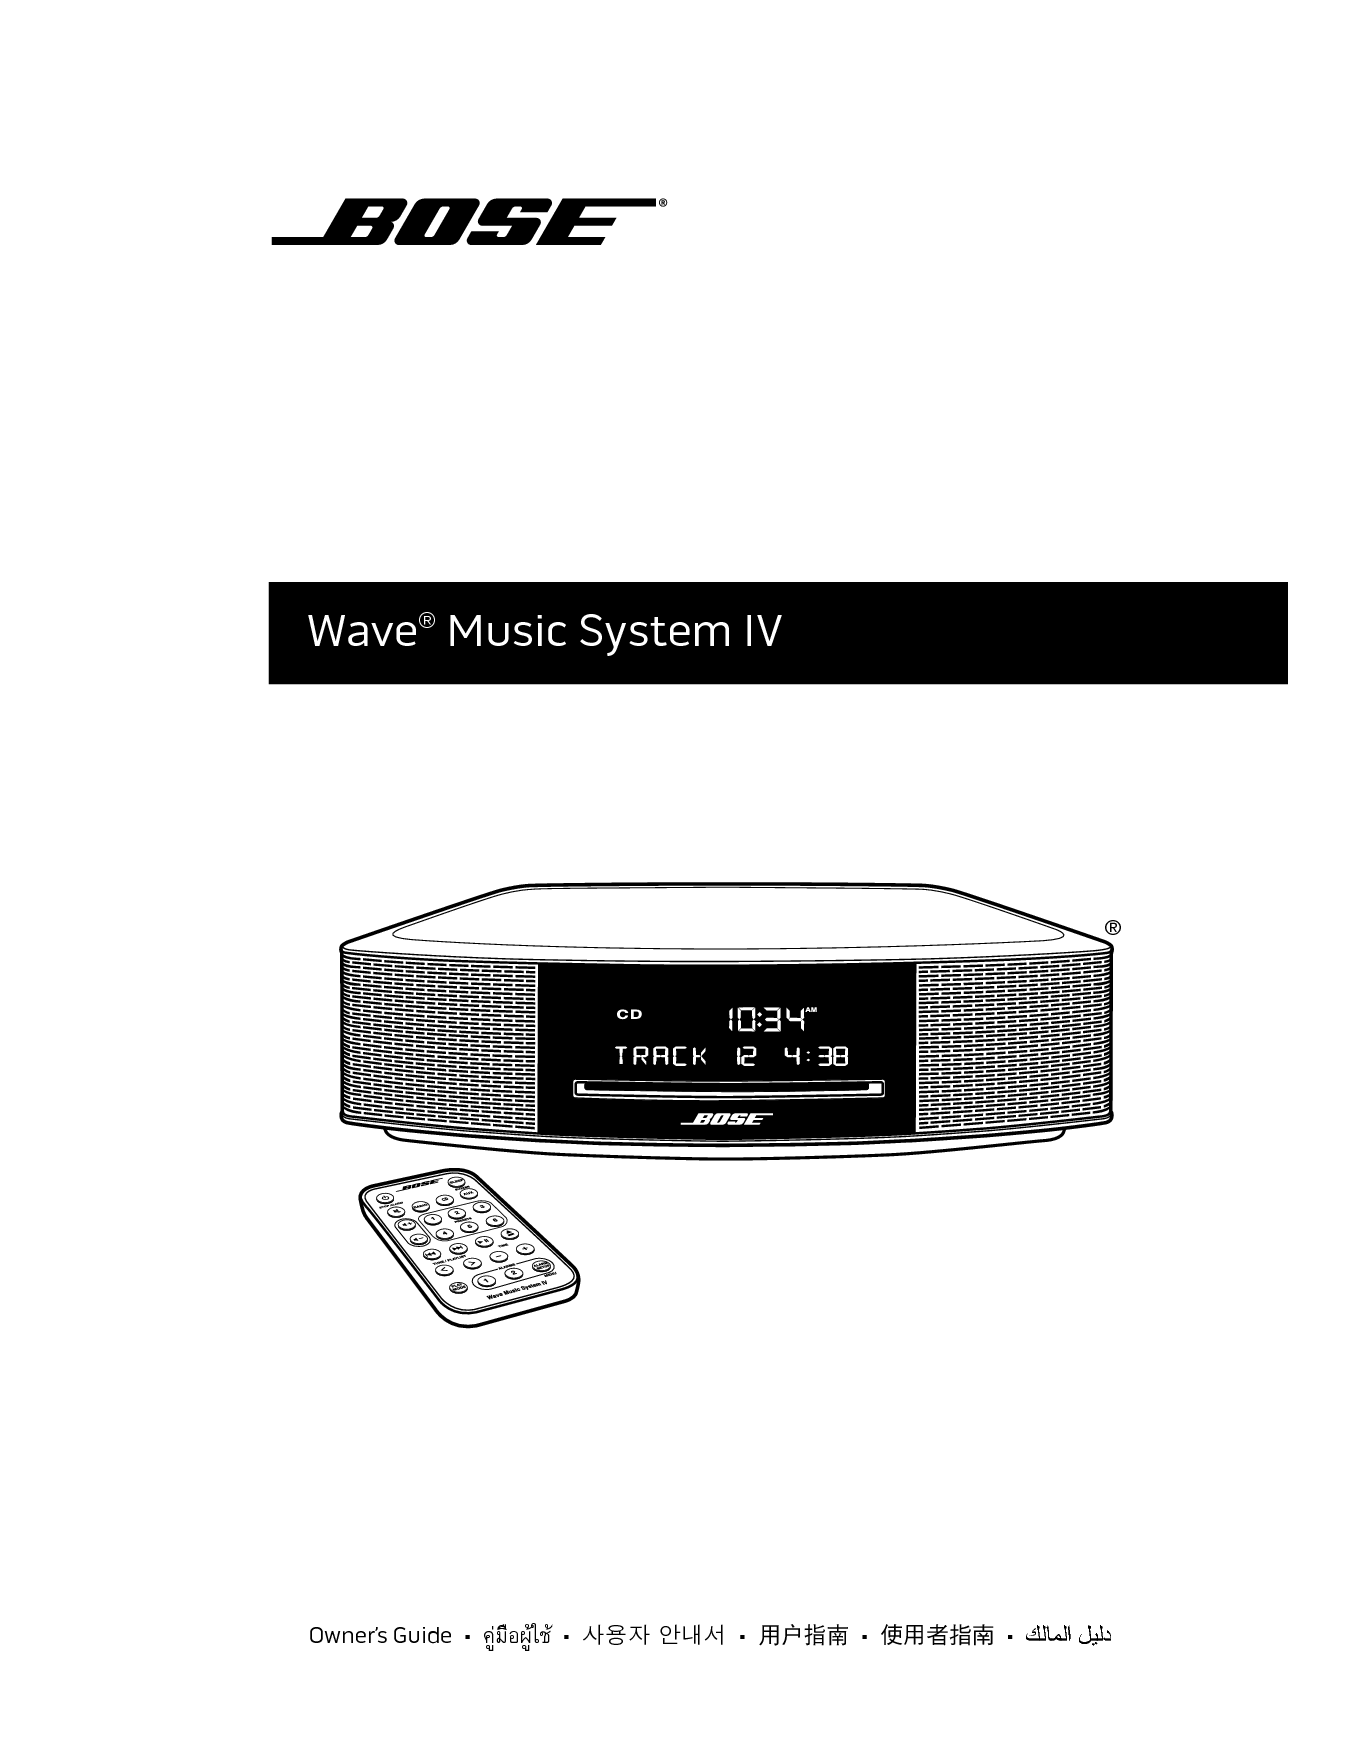 博士 Bose WAVE MUSIC SYSTEM IV 用户指南 封面